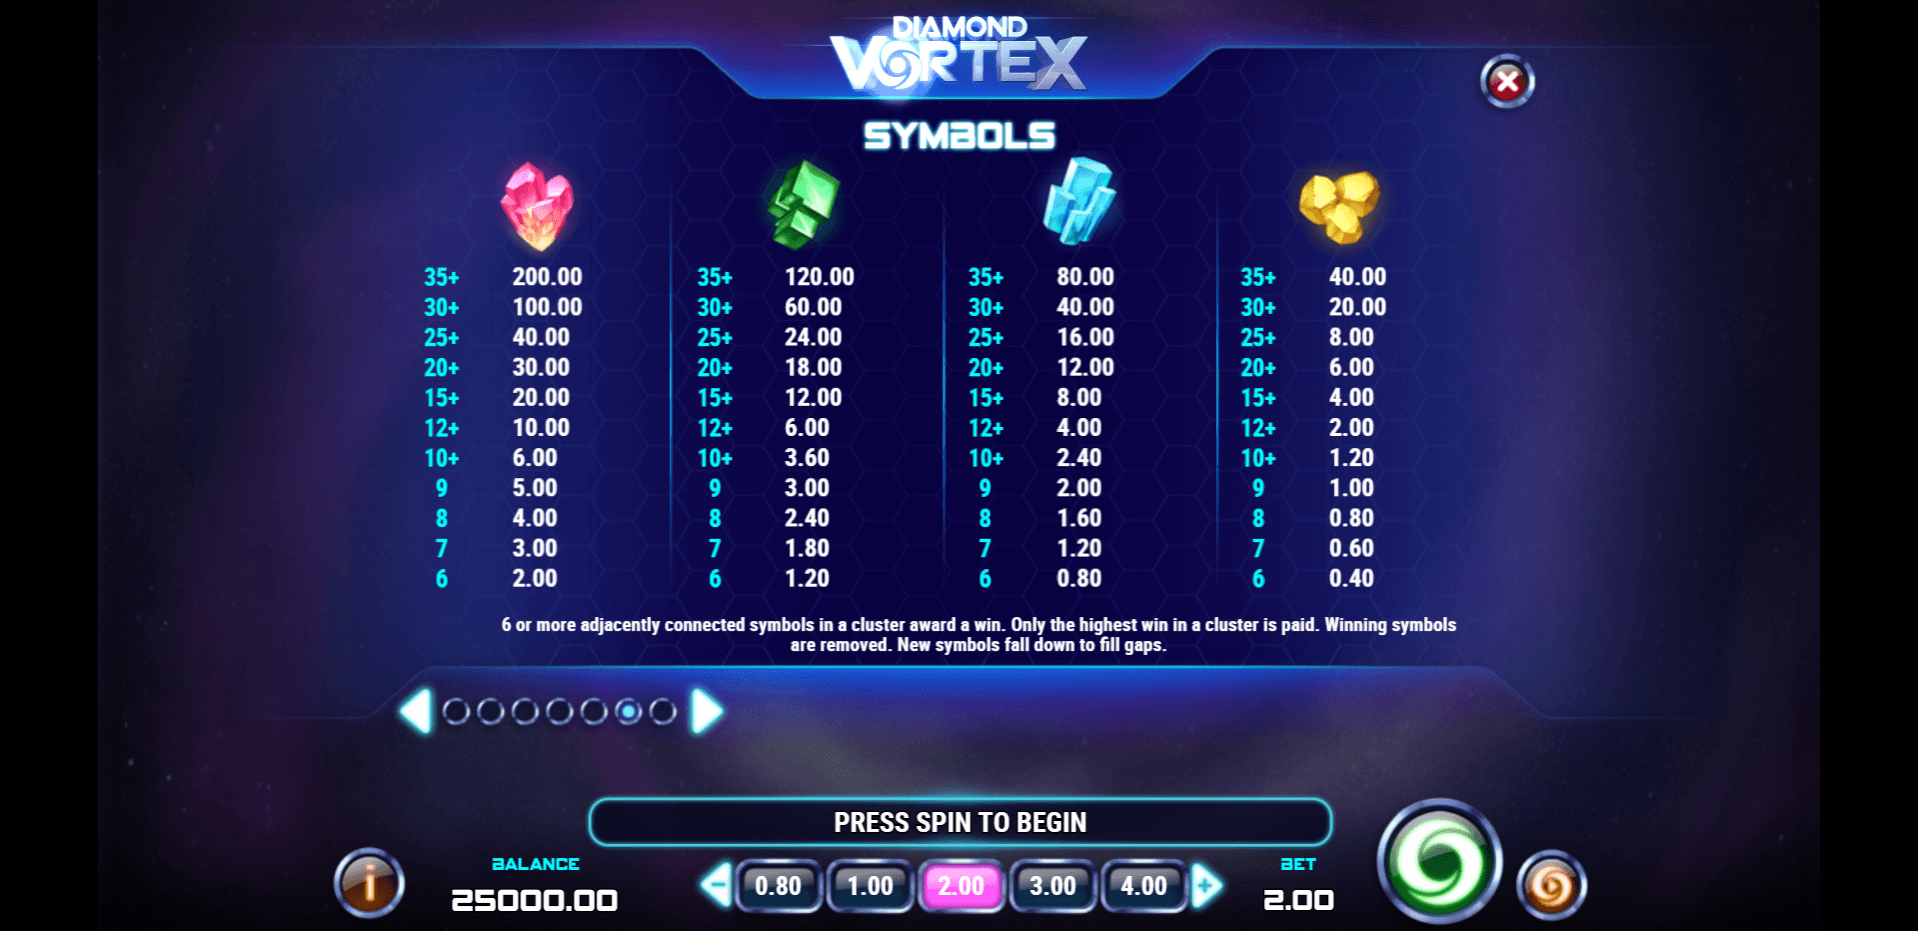 diamond vortex slot machine detail image 5